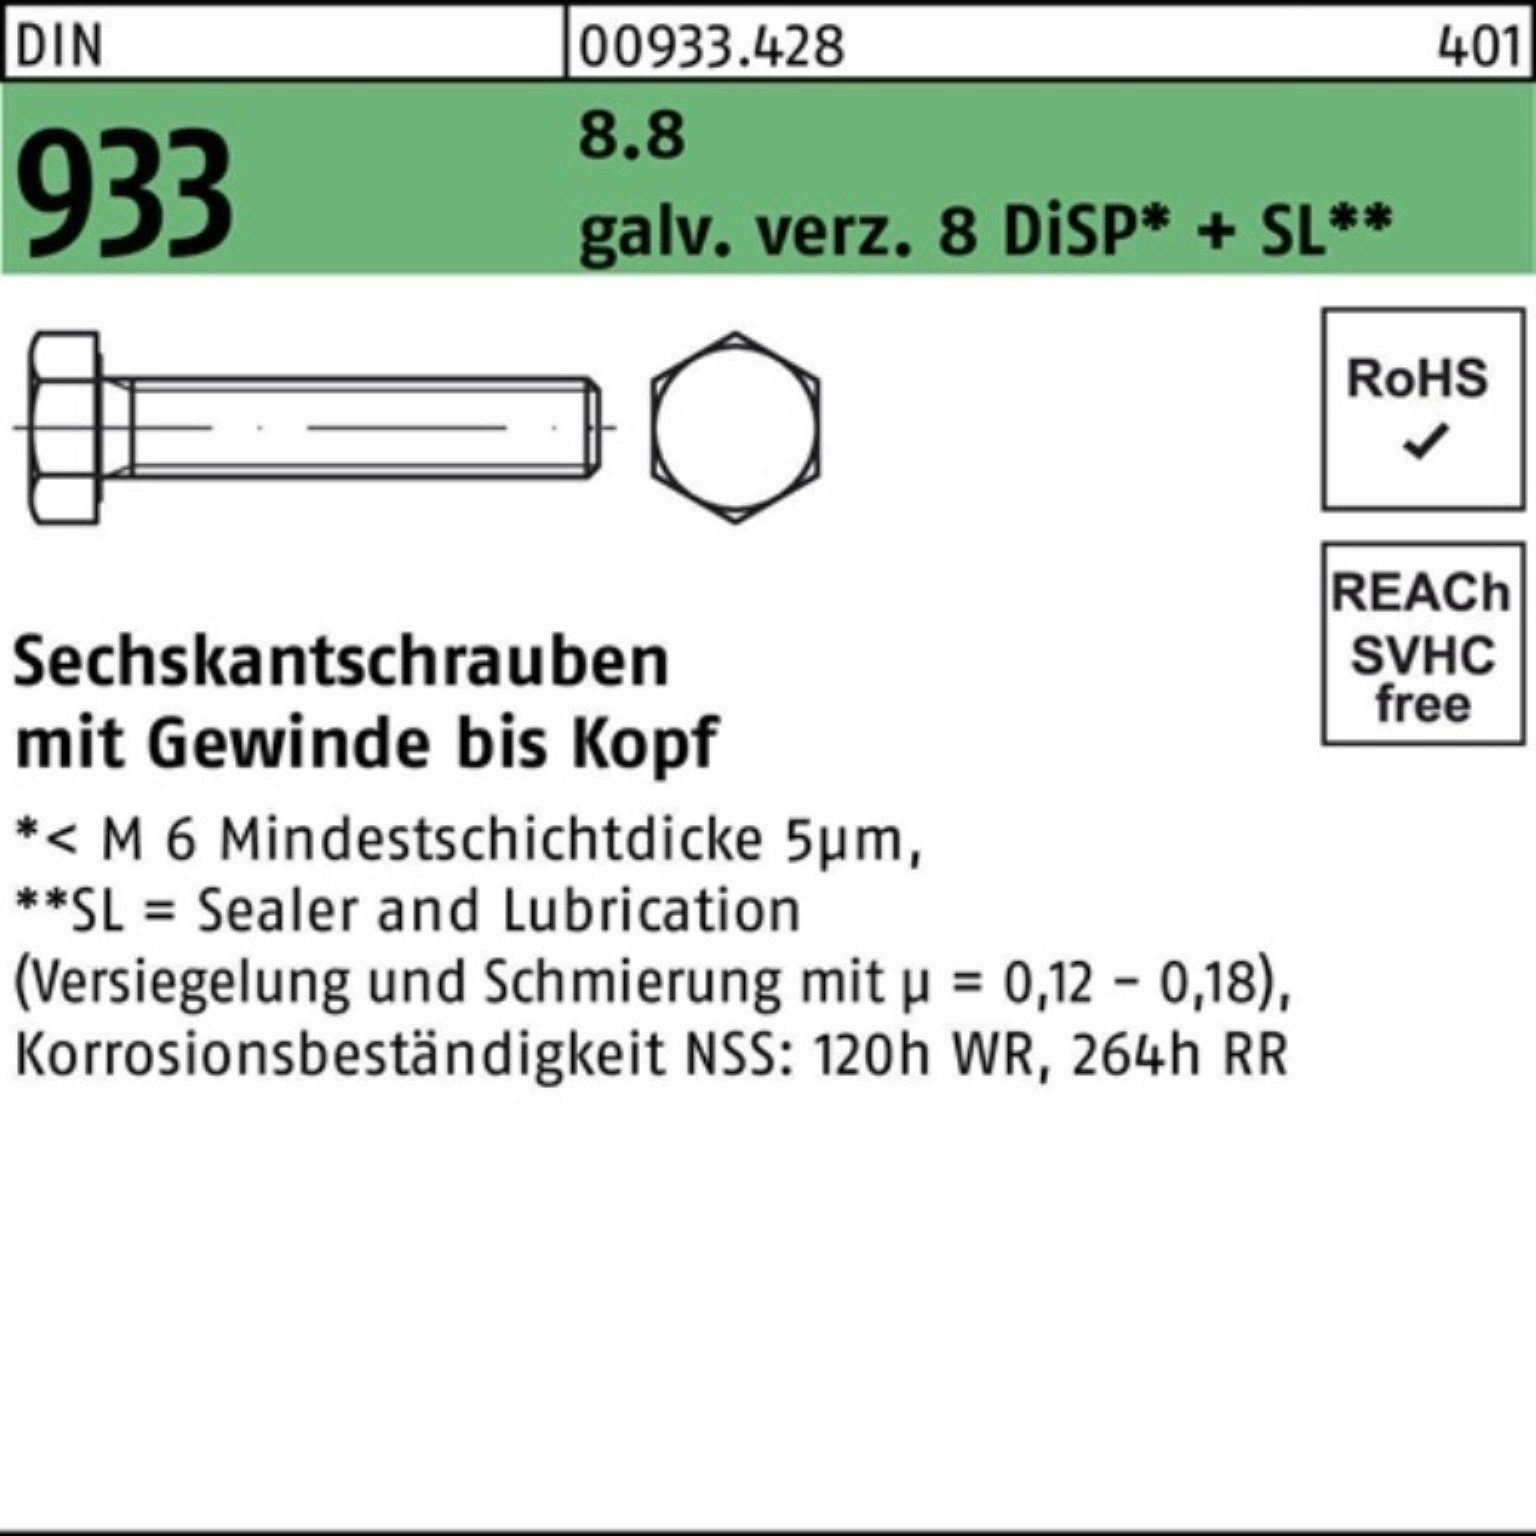 SL 14 DIN Sechskantschraube VG 933 M8x gal Pack Zn Sechskantschraube 8.8 200er DiSP 8 + Reyher